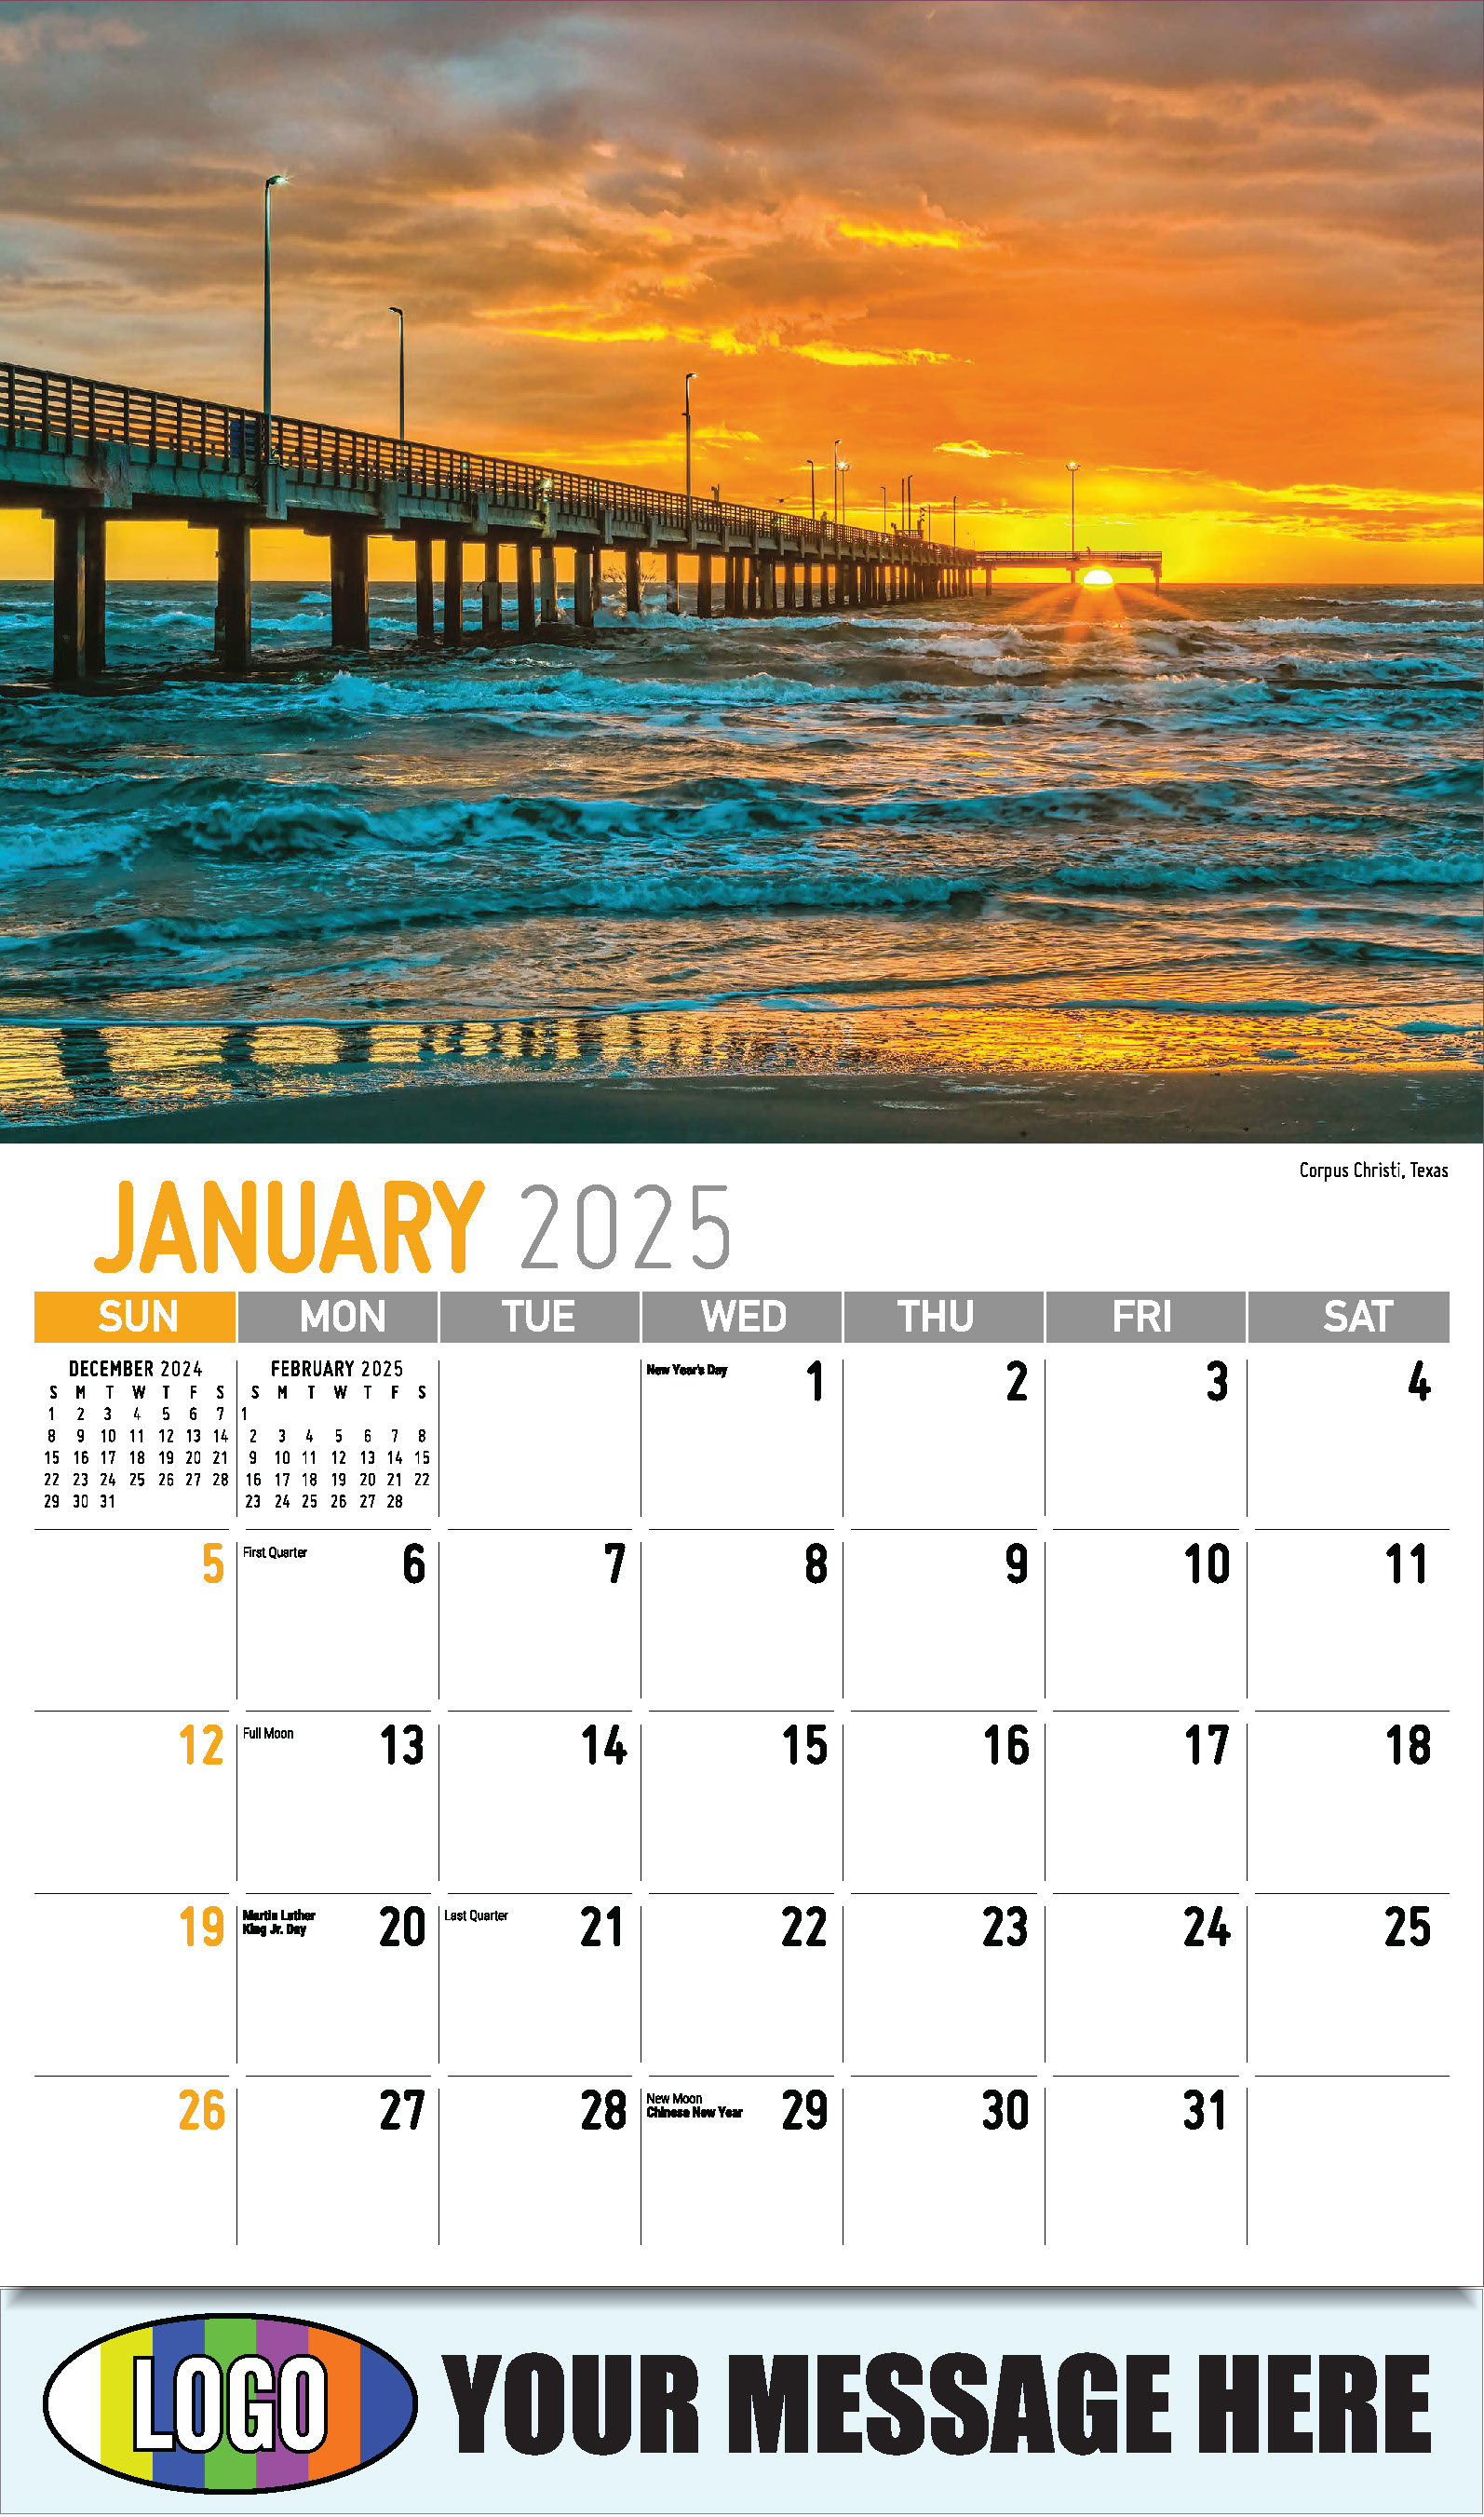 Scenes of Texas 2025 Business Advertising Calendar - January